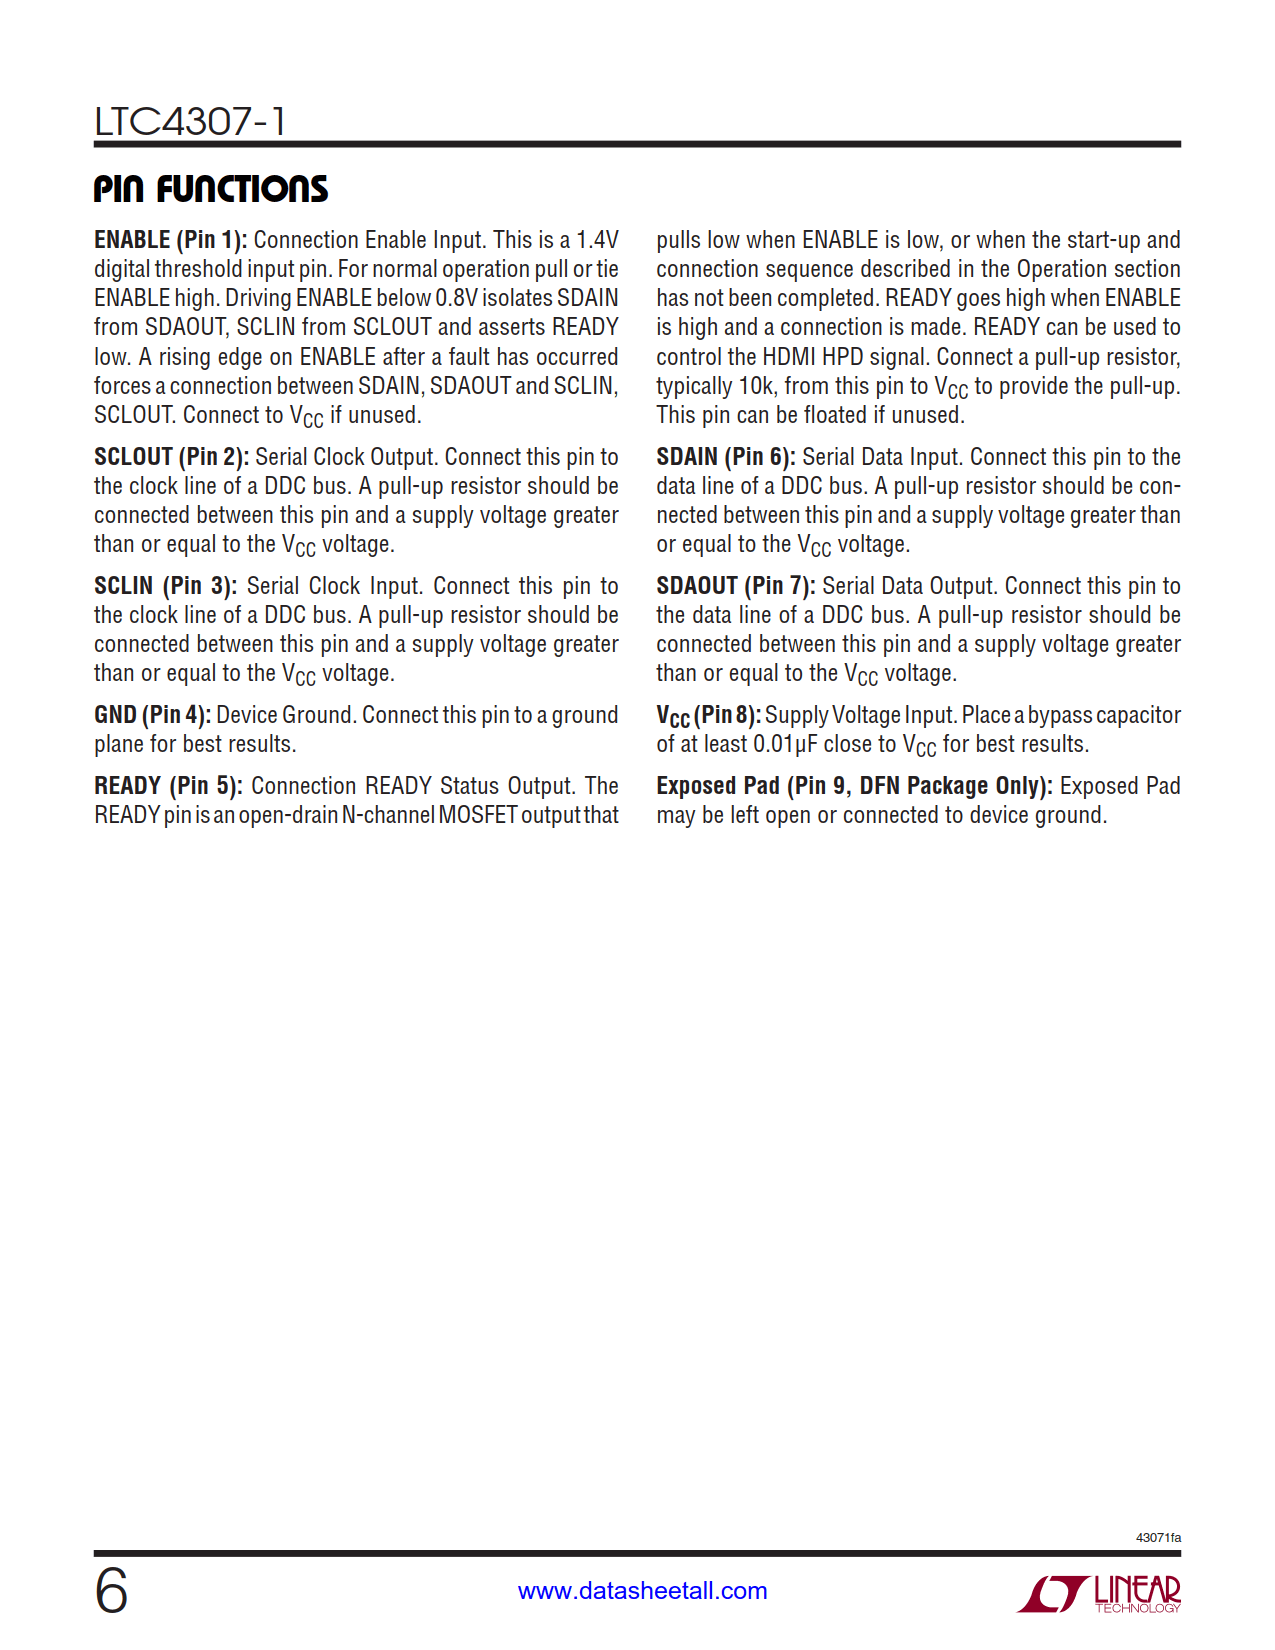 LTC4307-1 Datasheet Page 6